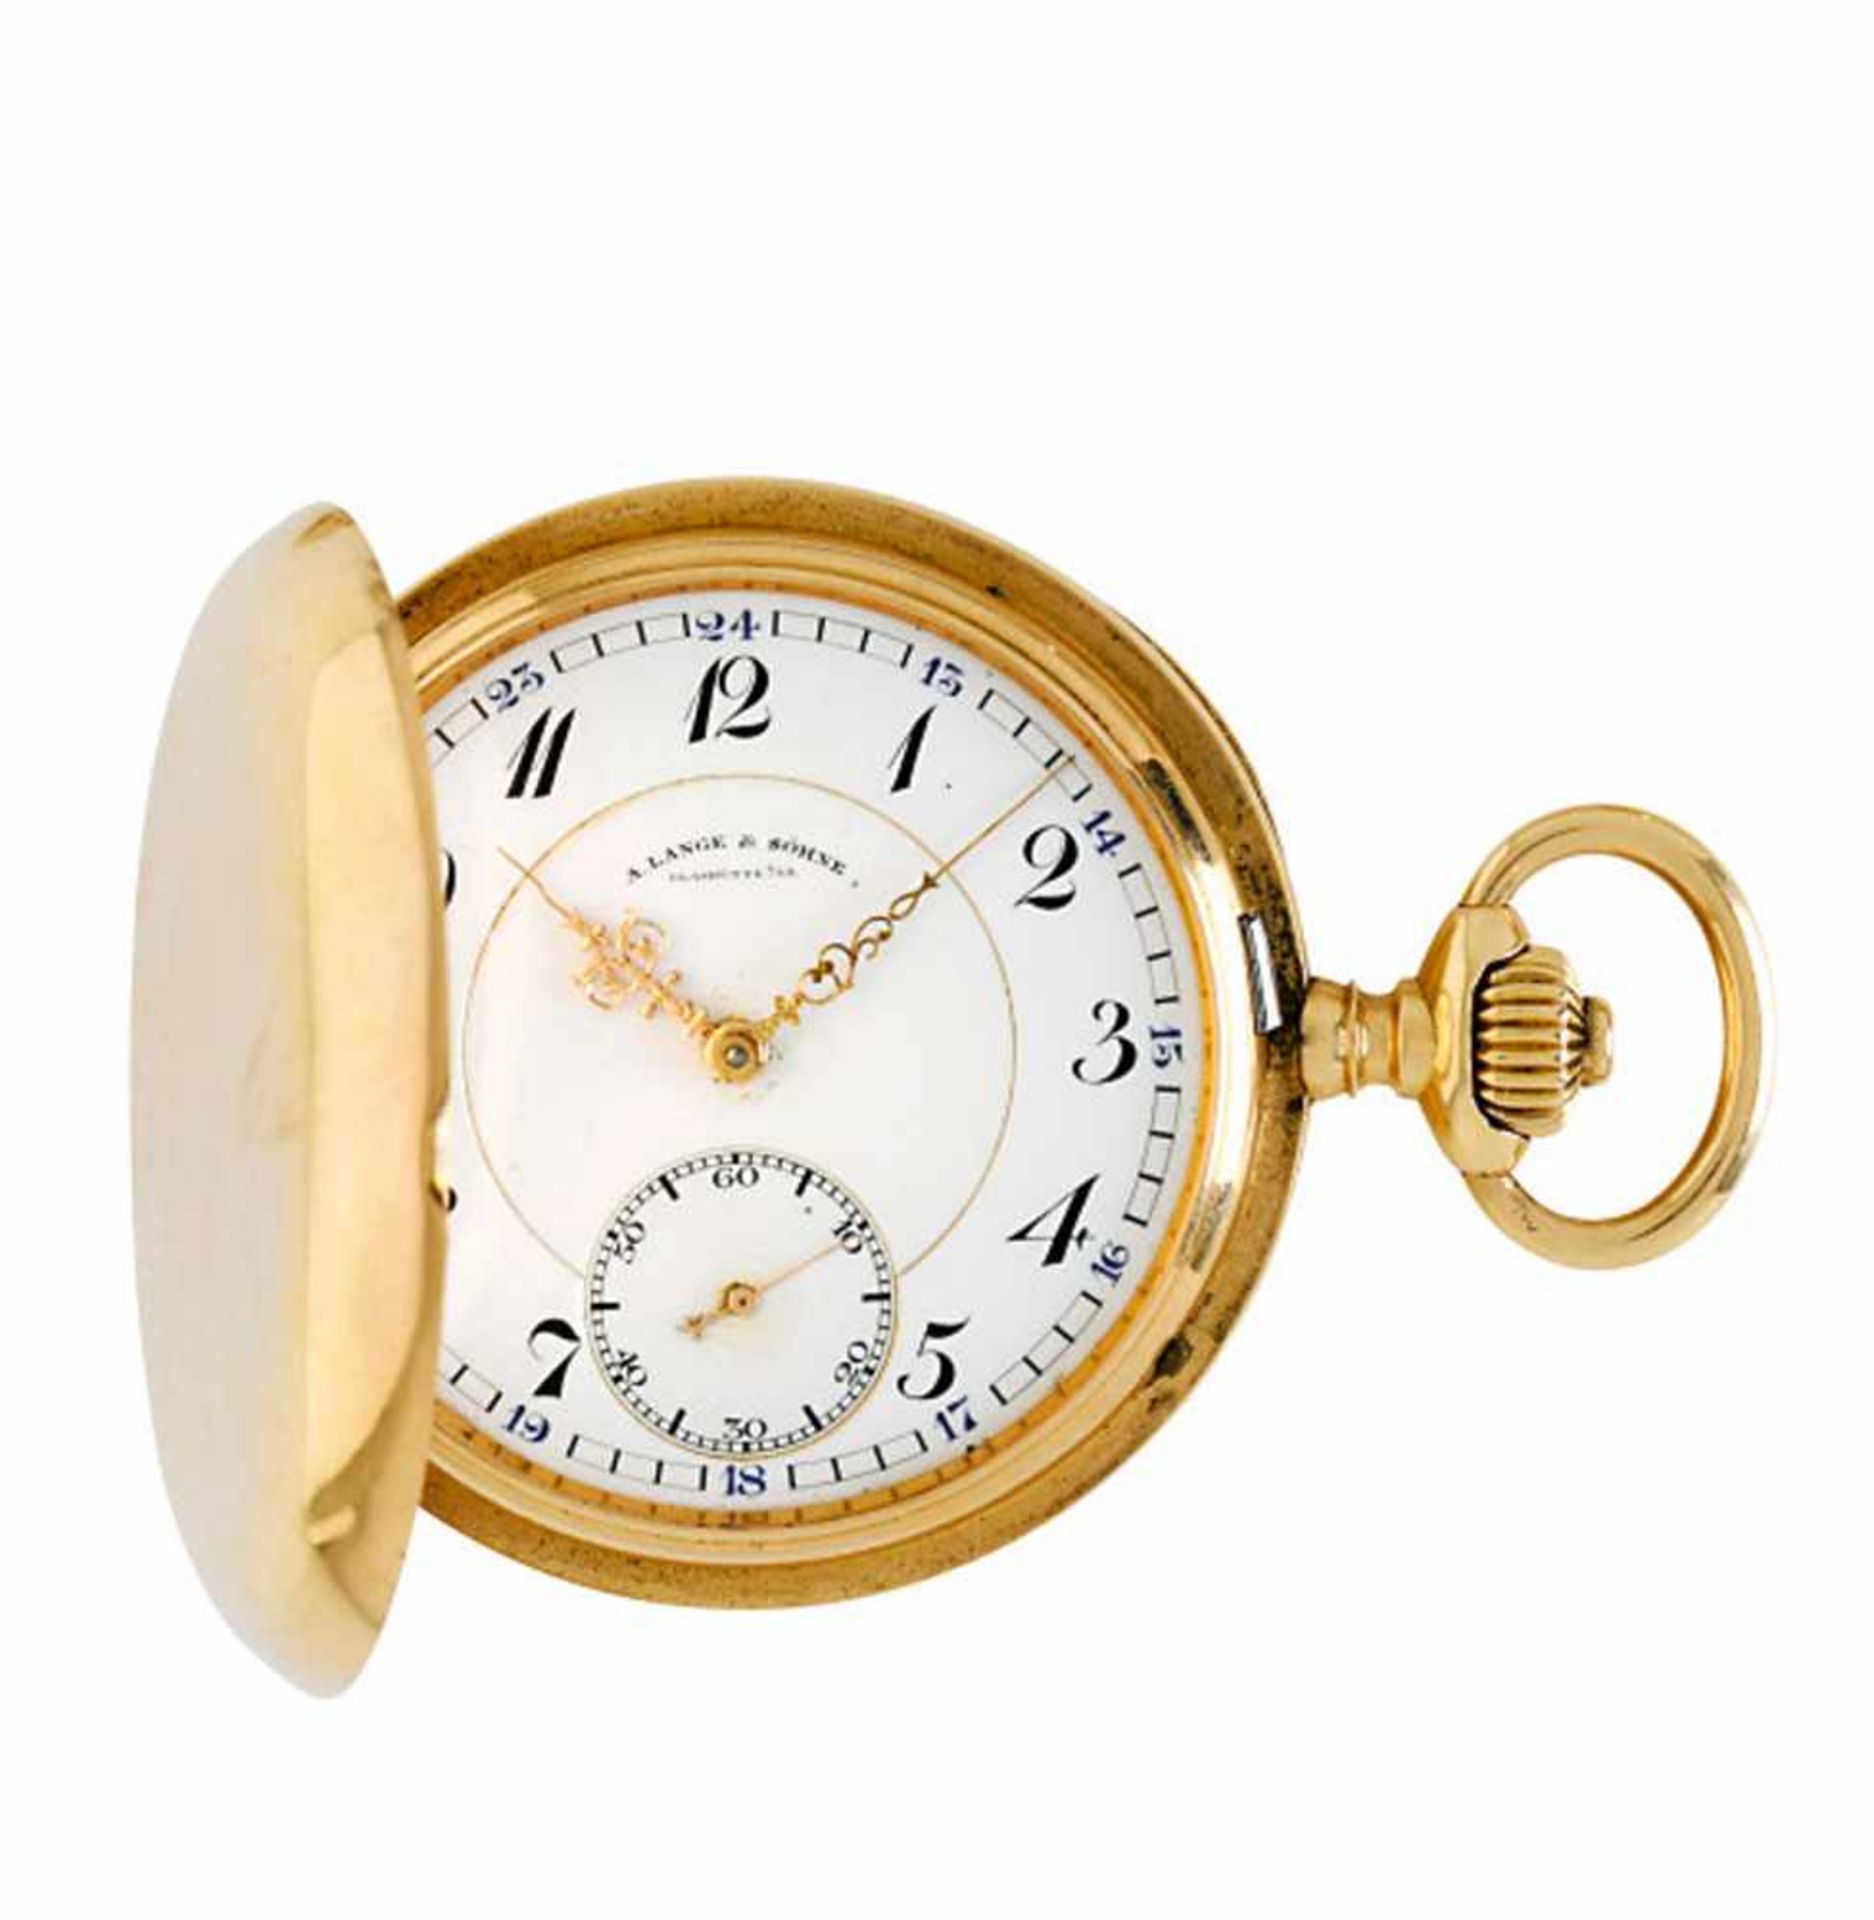 Herrensavonette mit Uhrkette A. Lange & Söhne, um 1900 18 K GG (Uhr) und 14 K RG (Uhrkette,